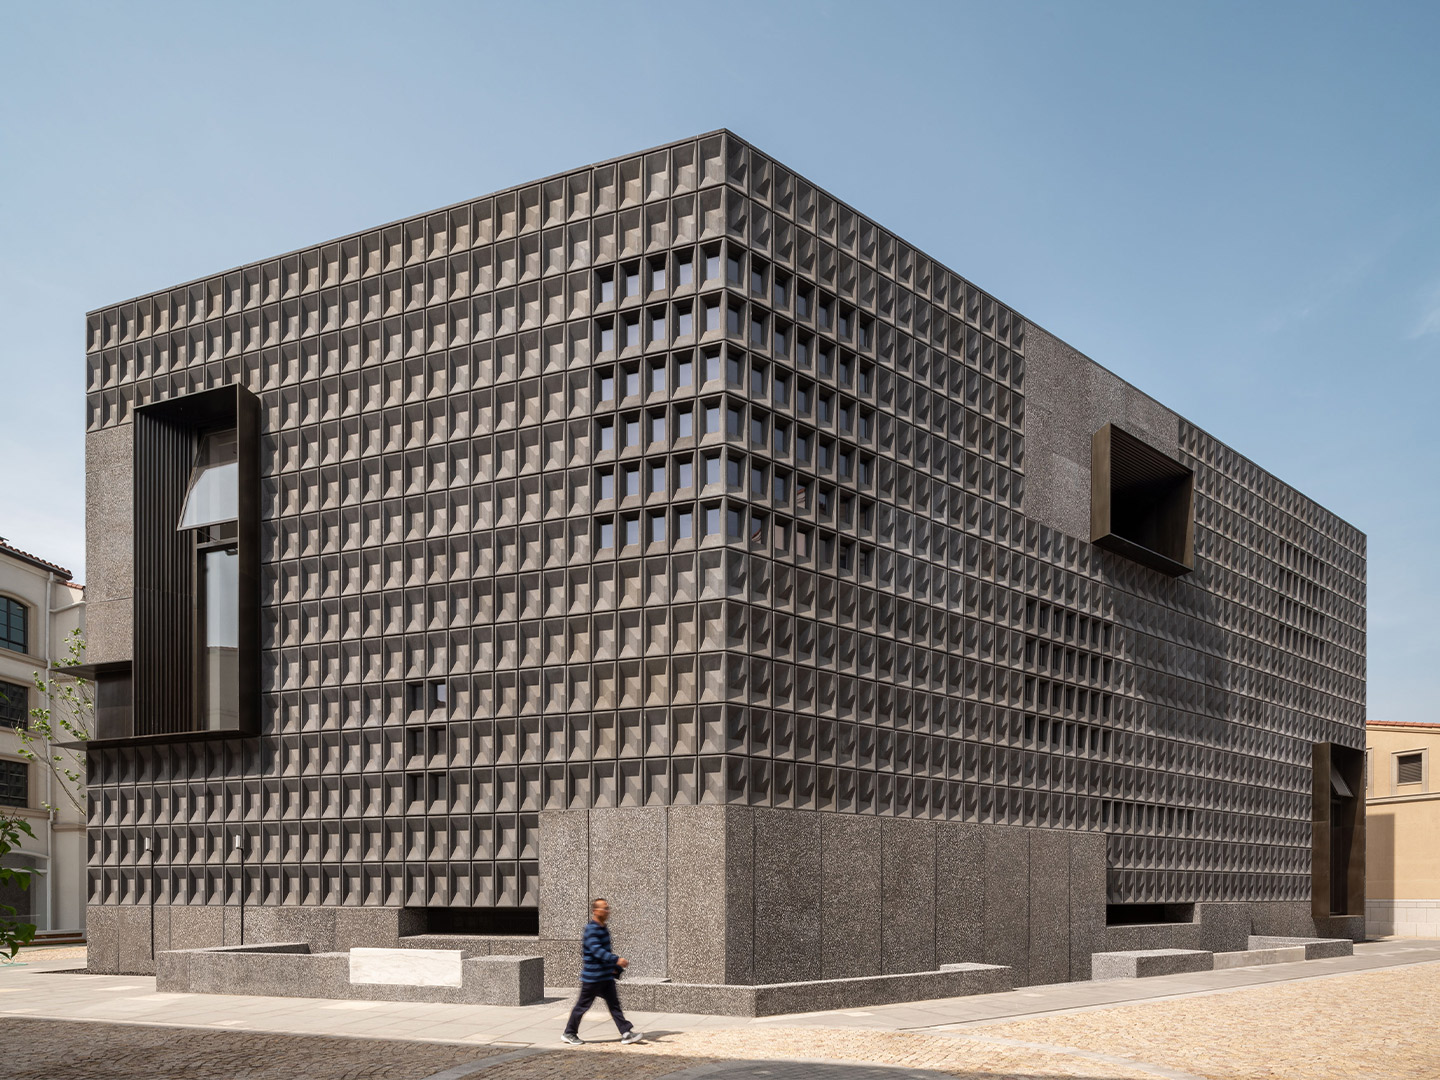 Aranya Art Centre in China by Neri&Hu architects